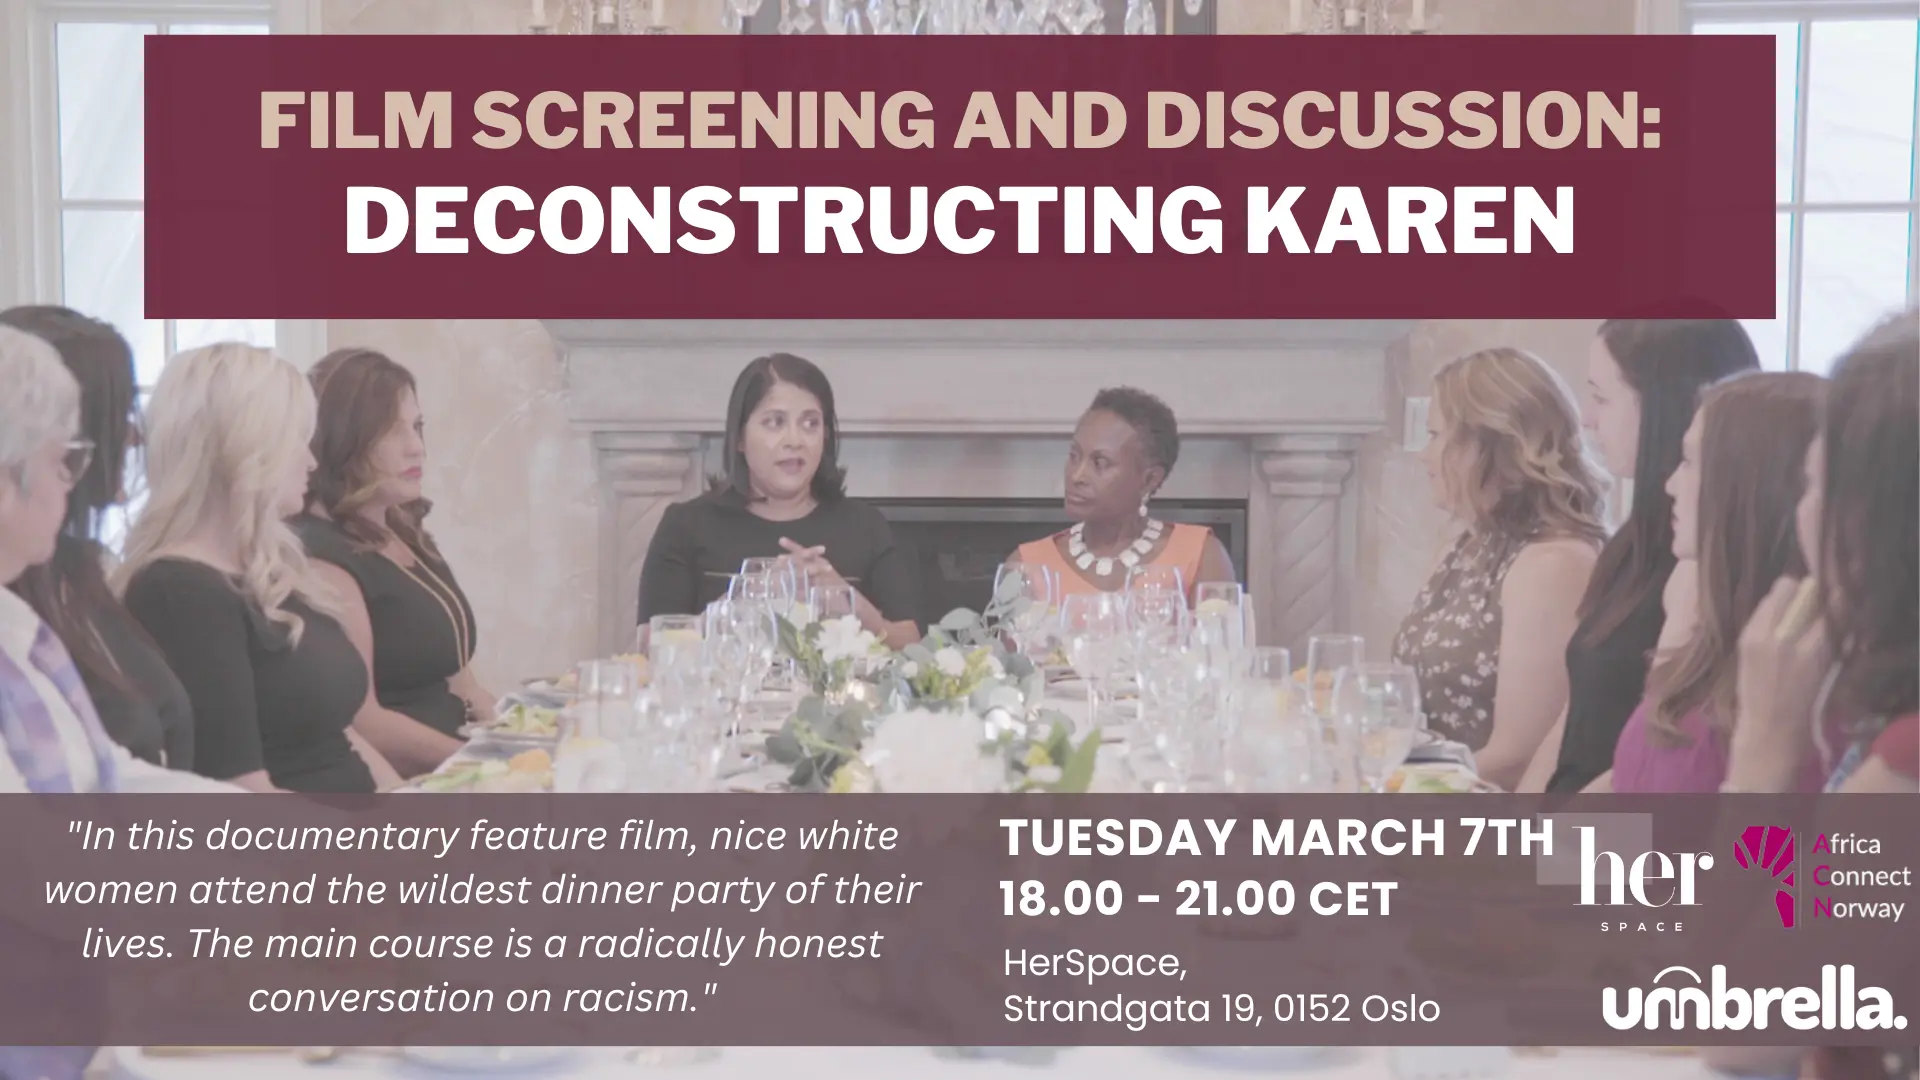 Poster for the film screening of Deconstructing Karen